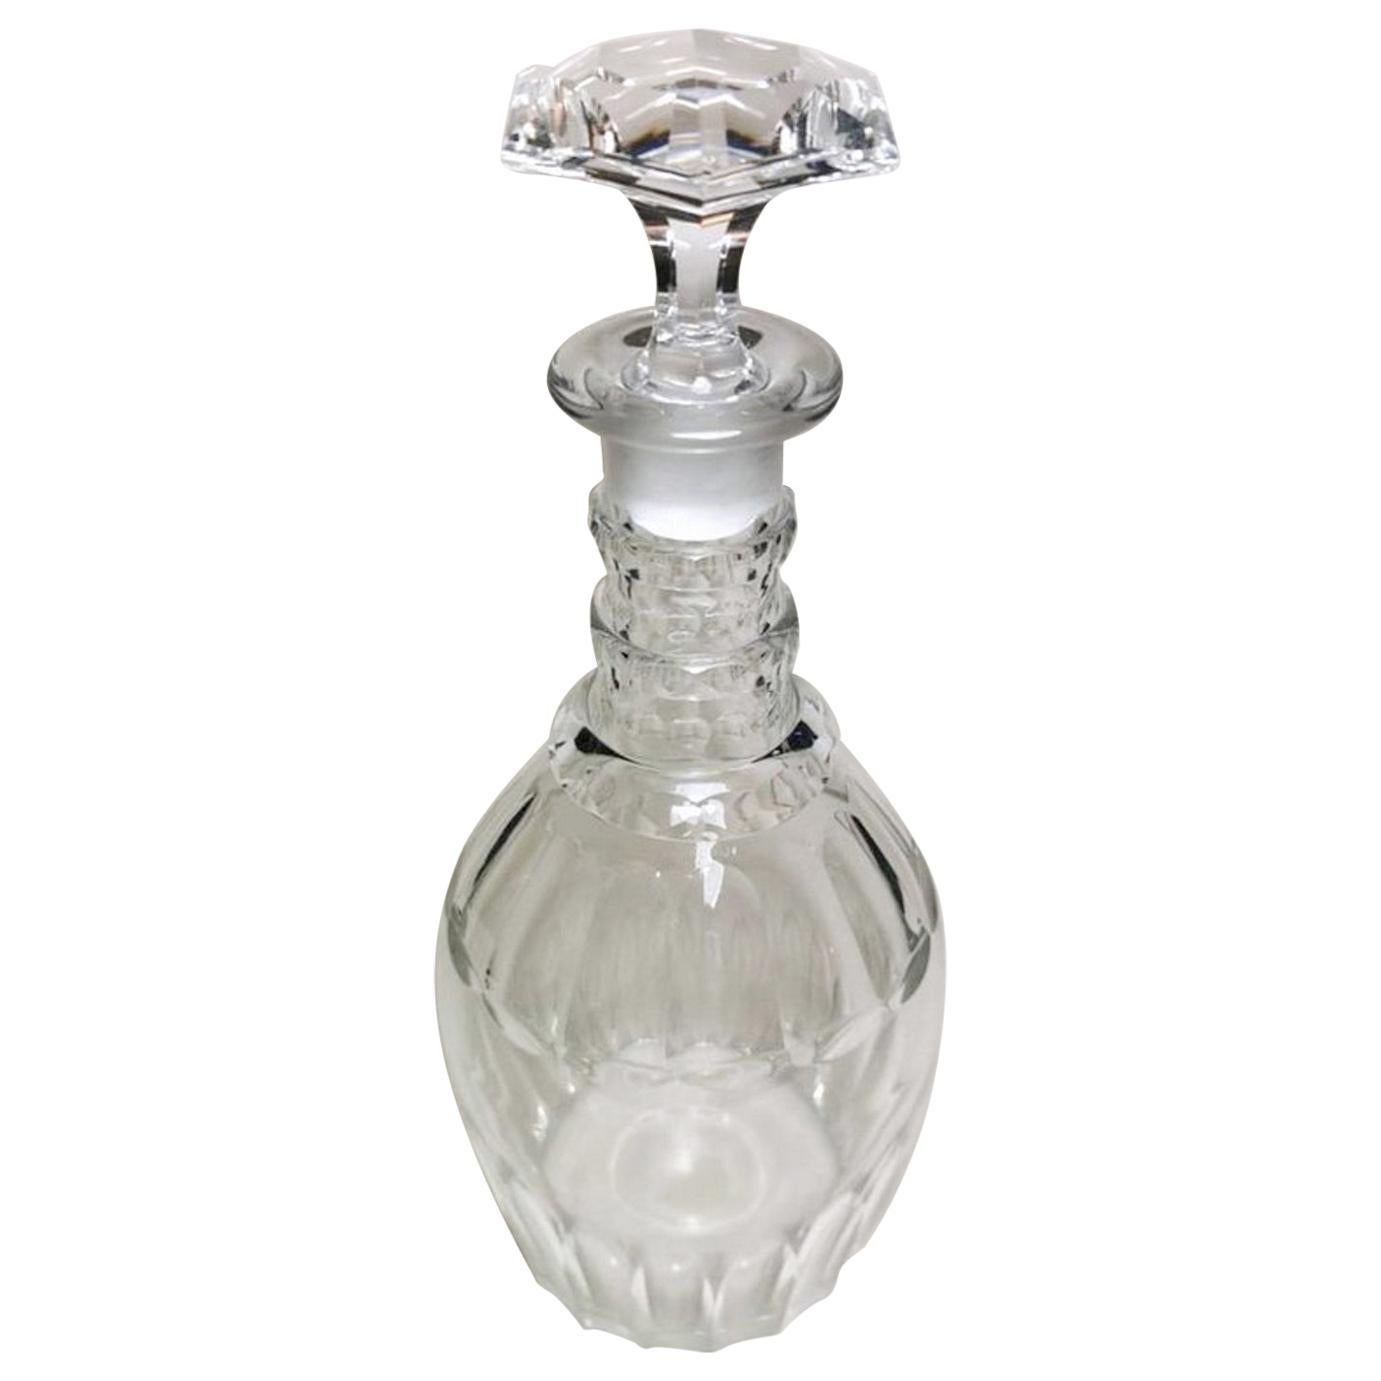 George IV Bottle Decanter English Crystal Cut Bottle